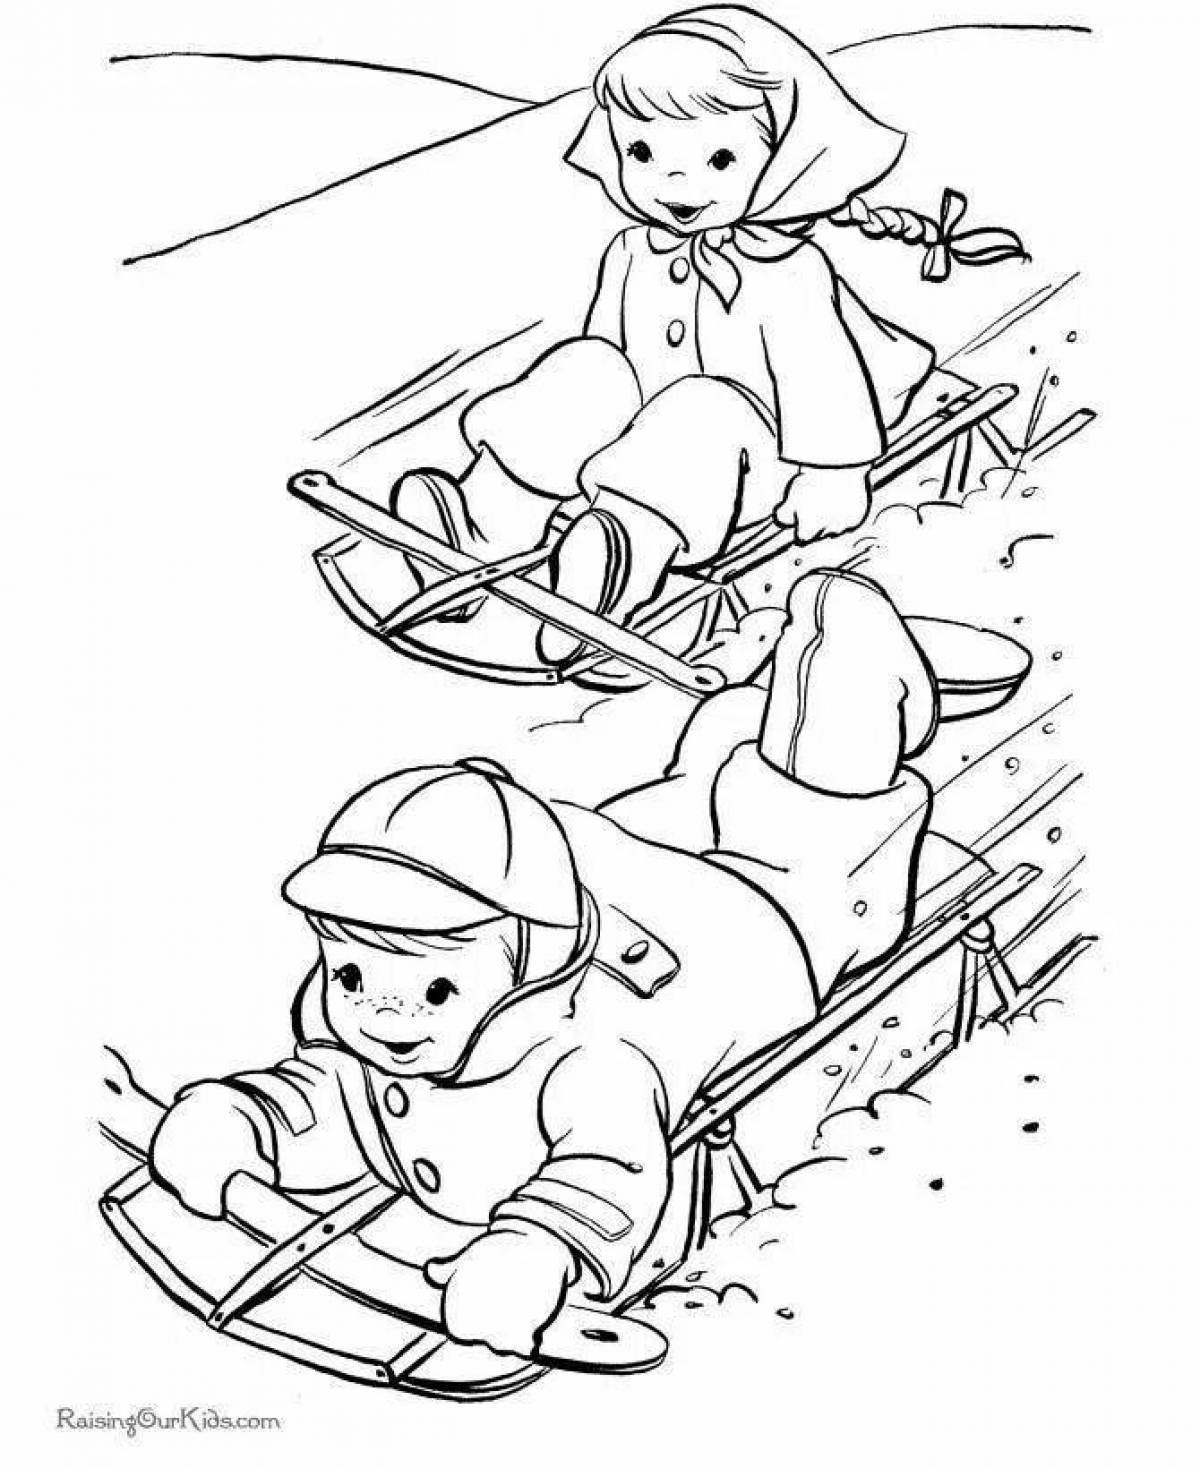 Joyful child on a sleigh coloring book